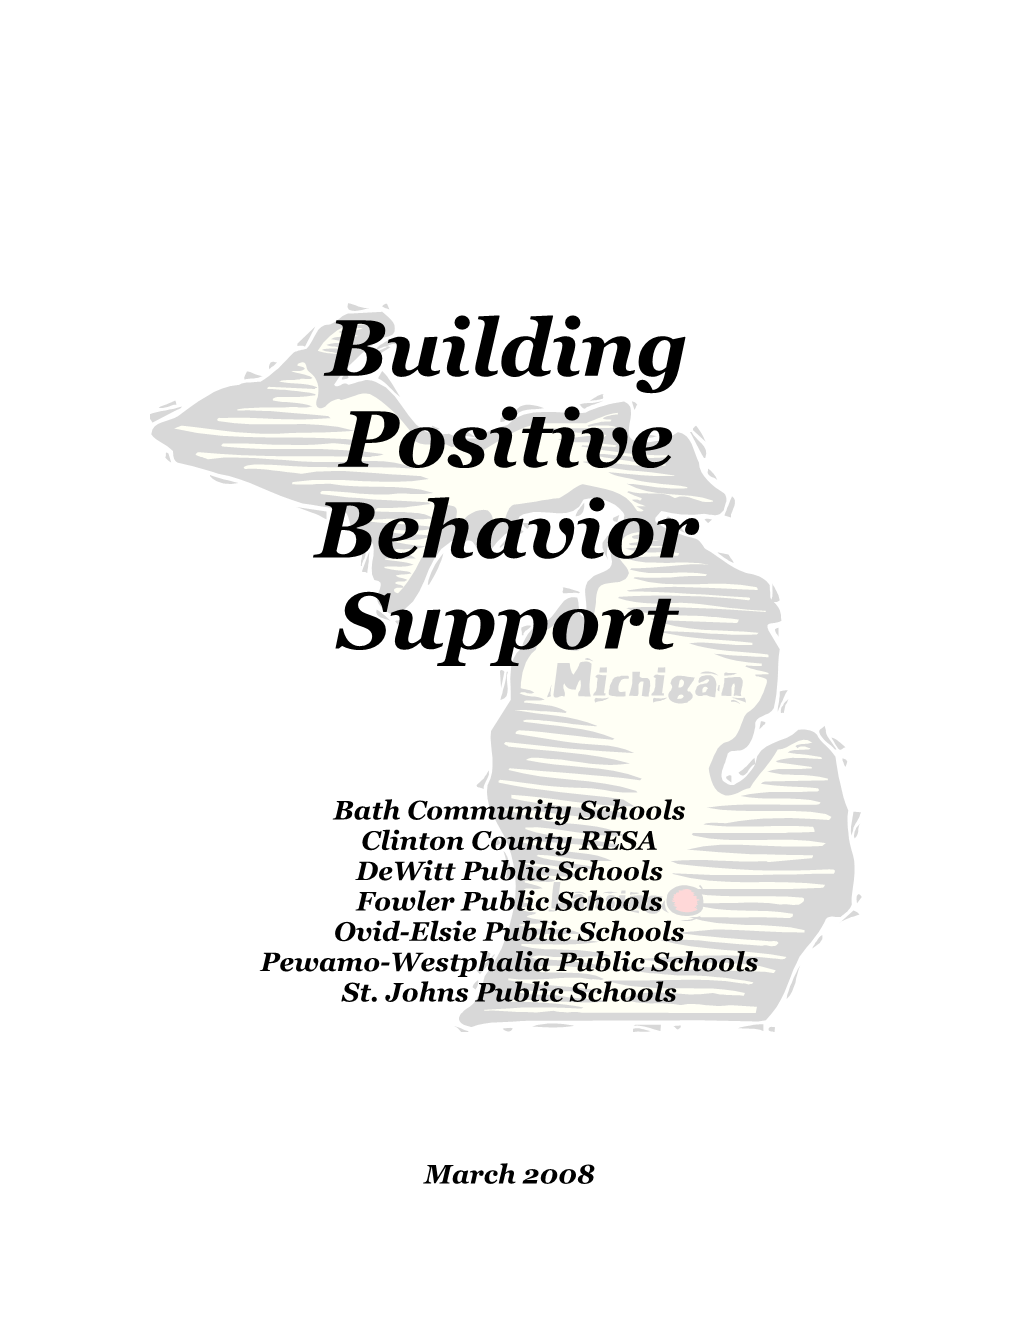 Building Positive Behavior Support Guideline Document 12 3 2008